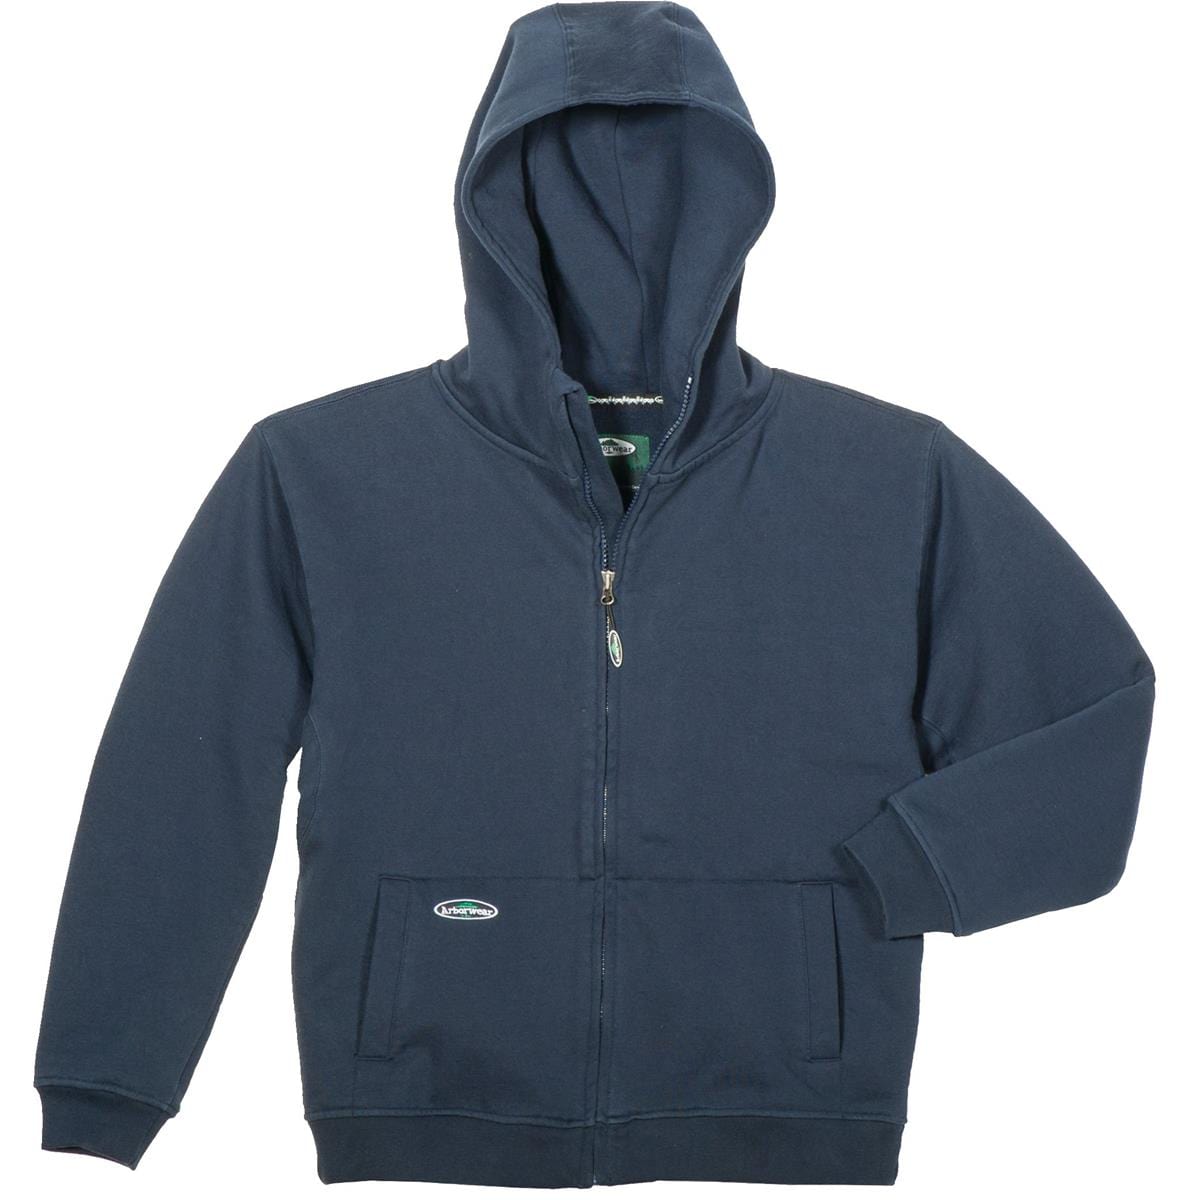 Arborwear Heavyweight Hooded Sweatshirt Zip-front